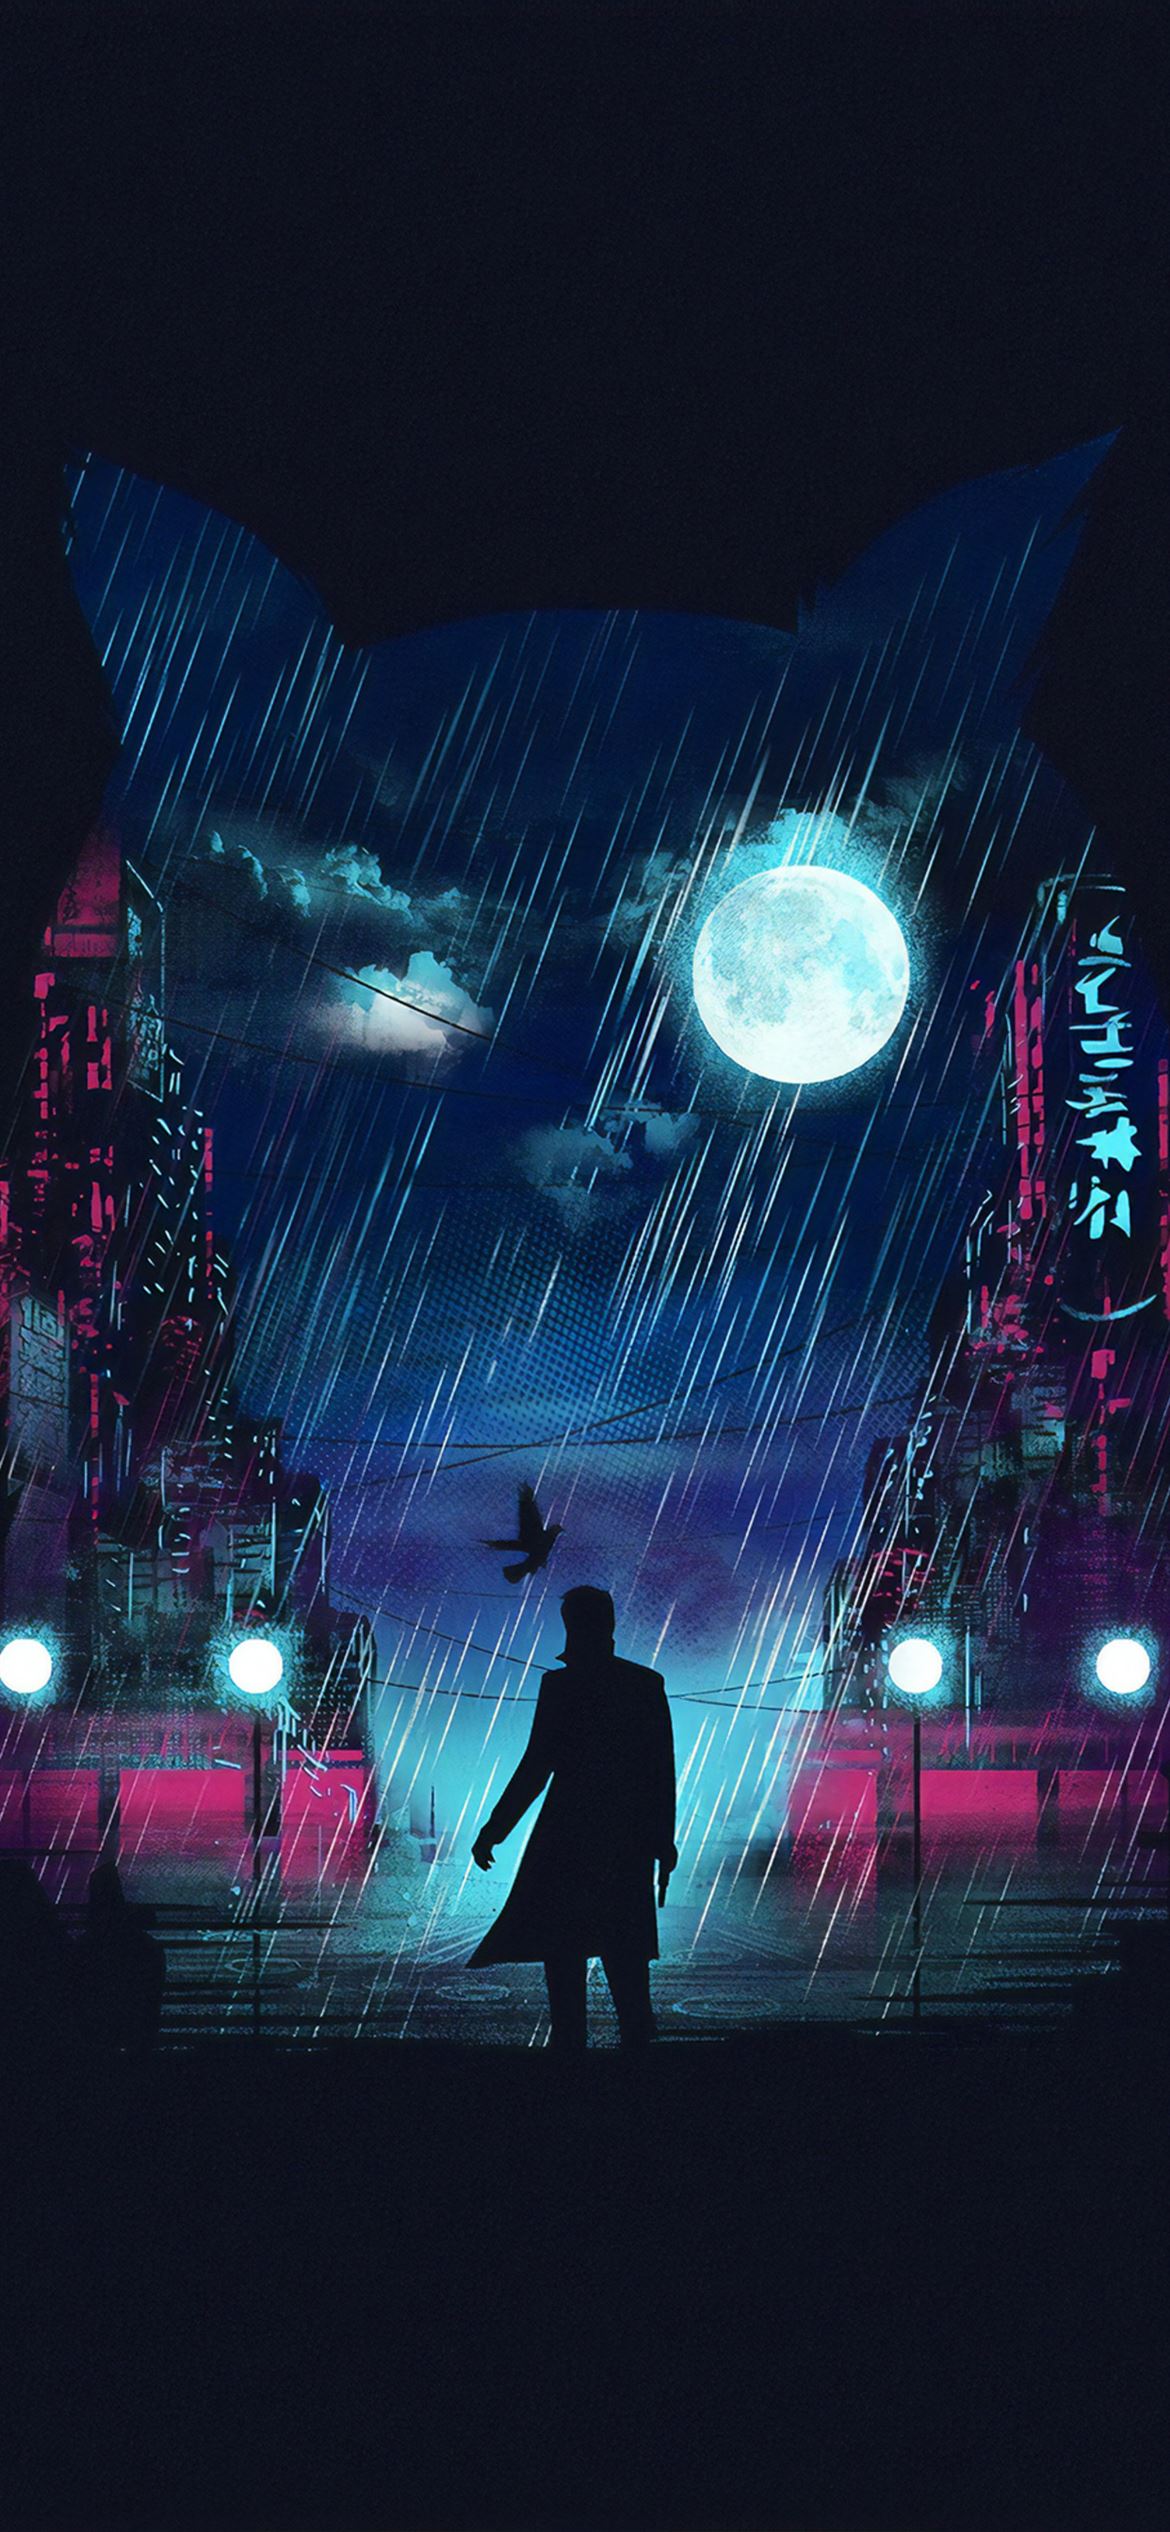 Blade Runner Digital Art 4k Iphone 12 Wallpapers Free Download